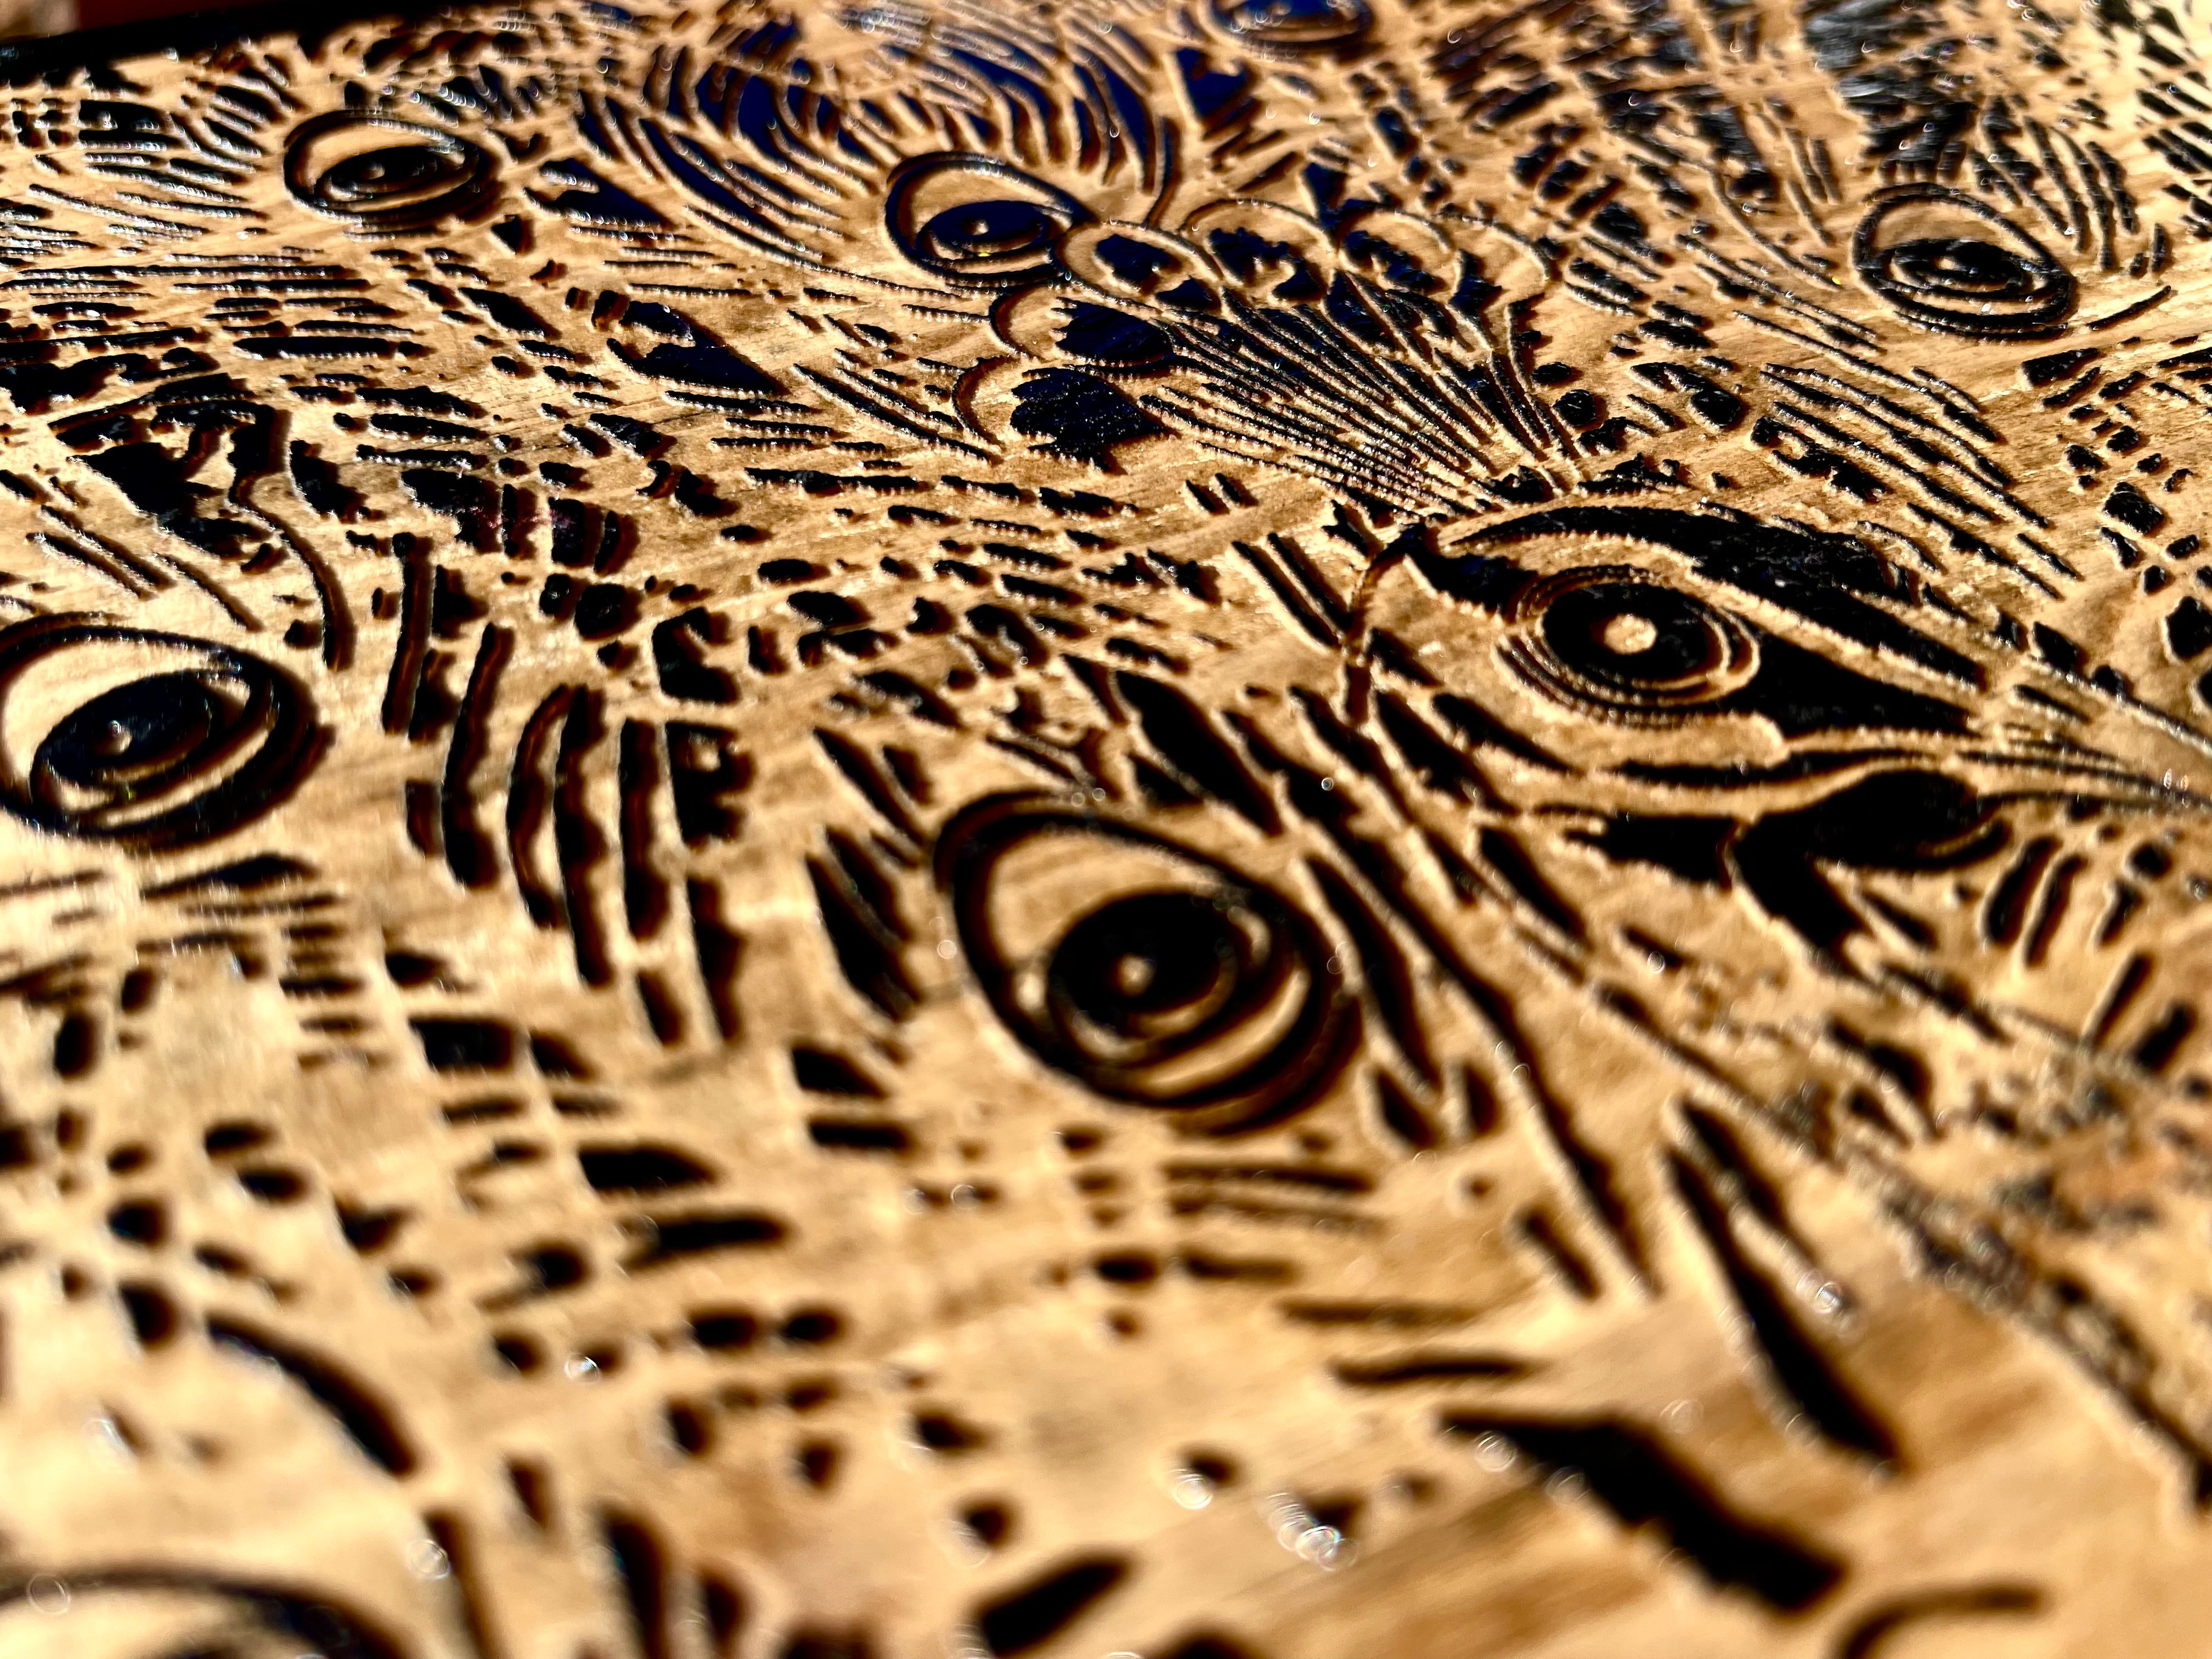 PEATCOCK 8x8 engraving on wood